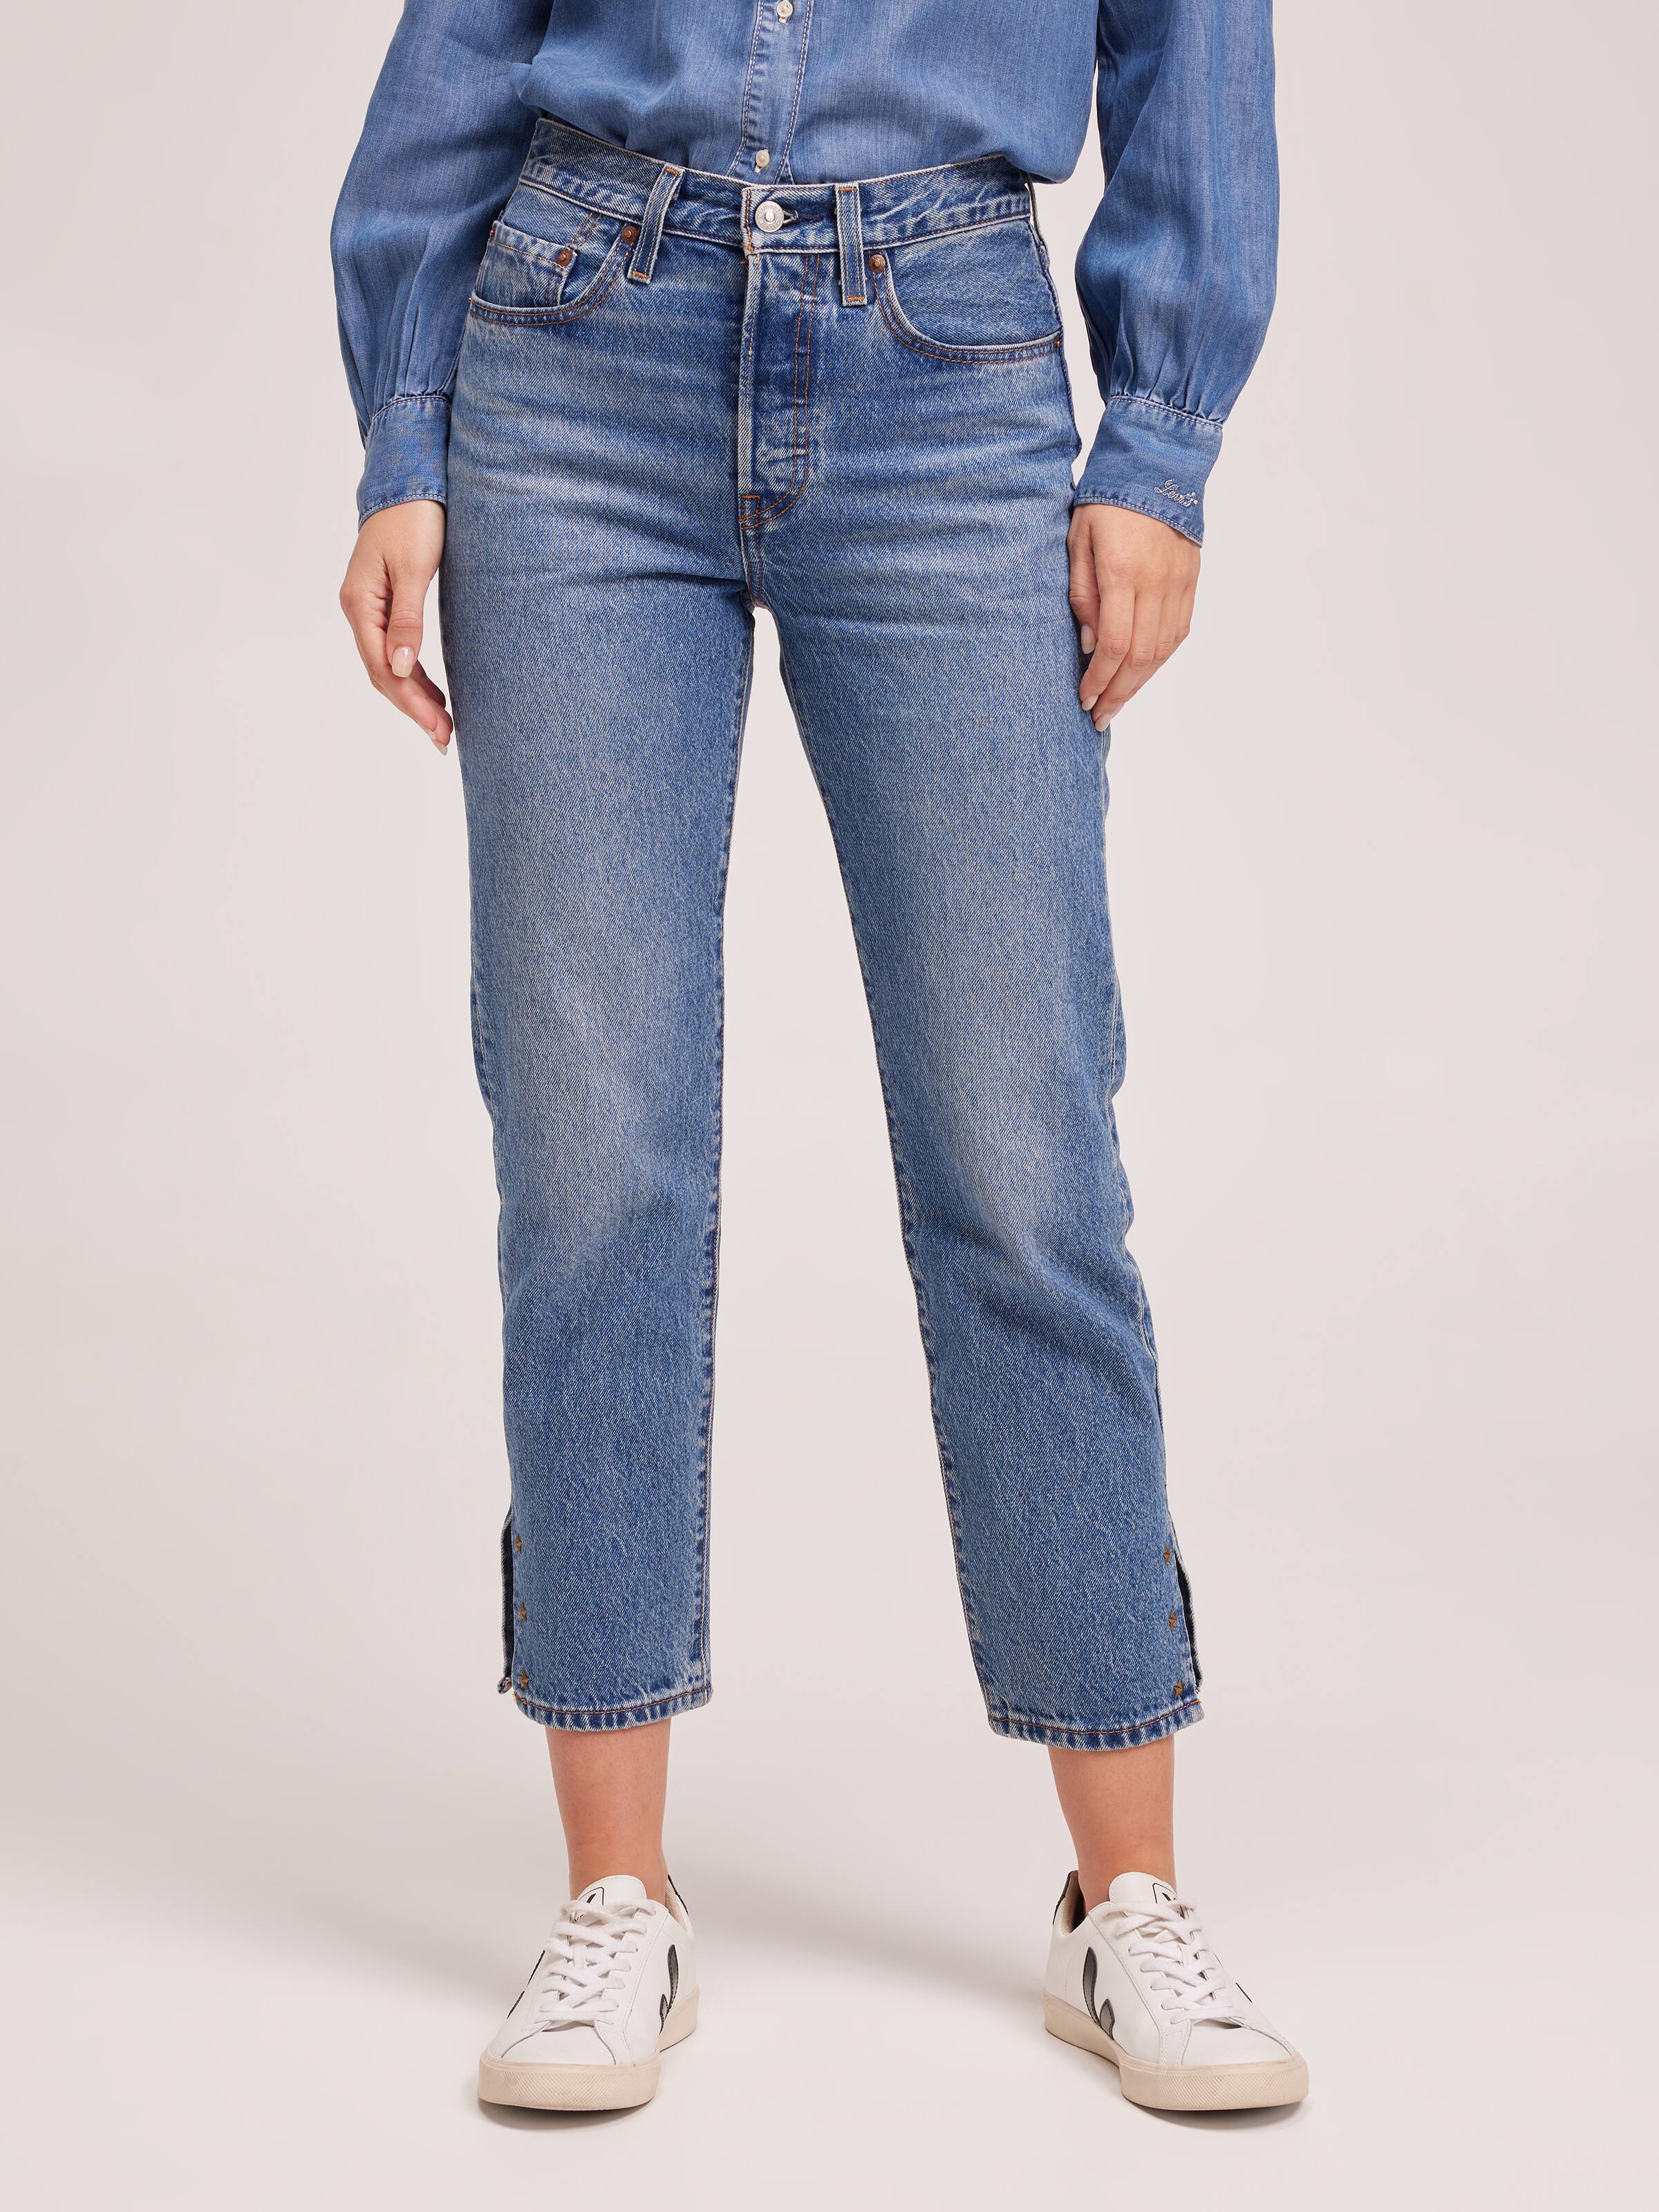 Gray Jeans/ Side Pocket Jeans/ Denim Jeans in Nairobi Central